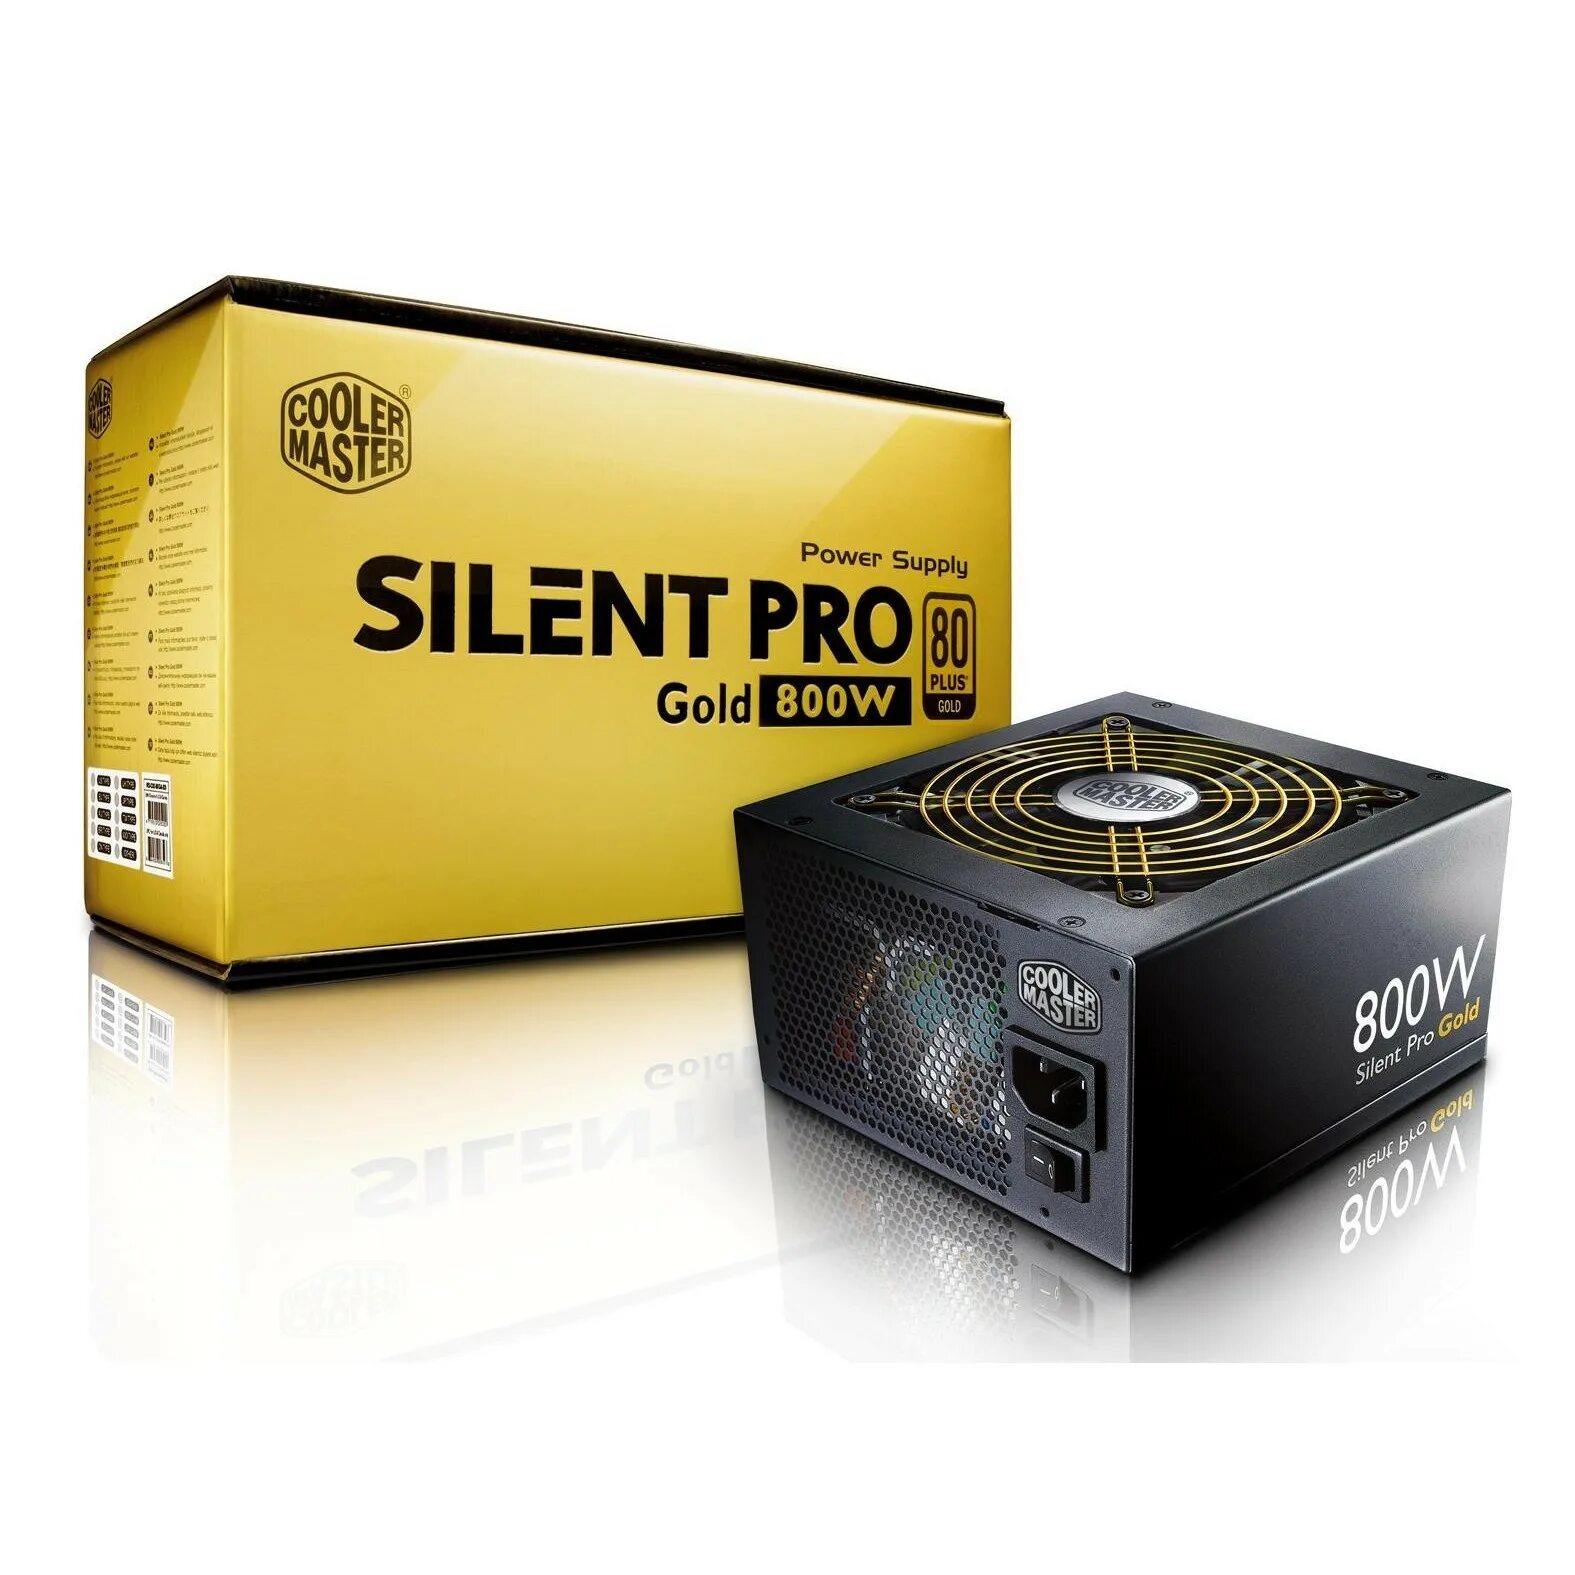 Пауэр голд. Блок питания Cooler Master Silent Pro Gold 1200w. Блок питания Cooler Master Silent Pro Gold 800w. Cooler Master 1000w Silent Pro. Cooler Master Silent Pro 700w.